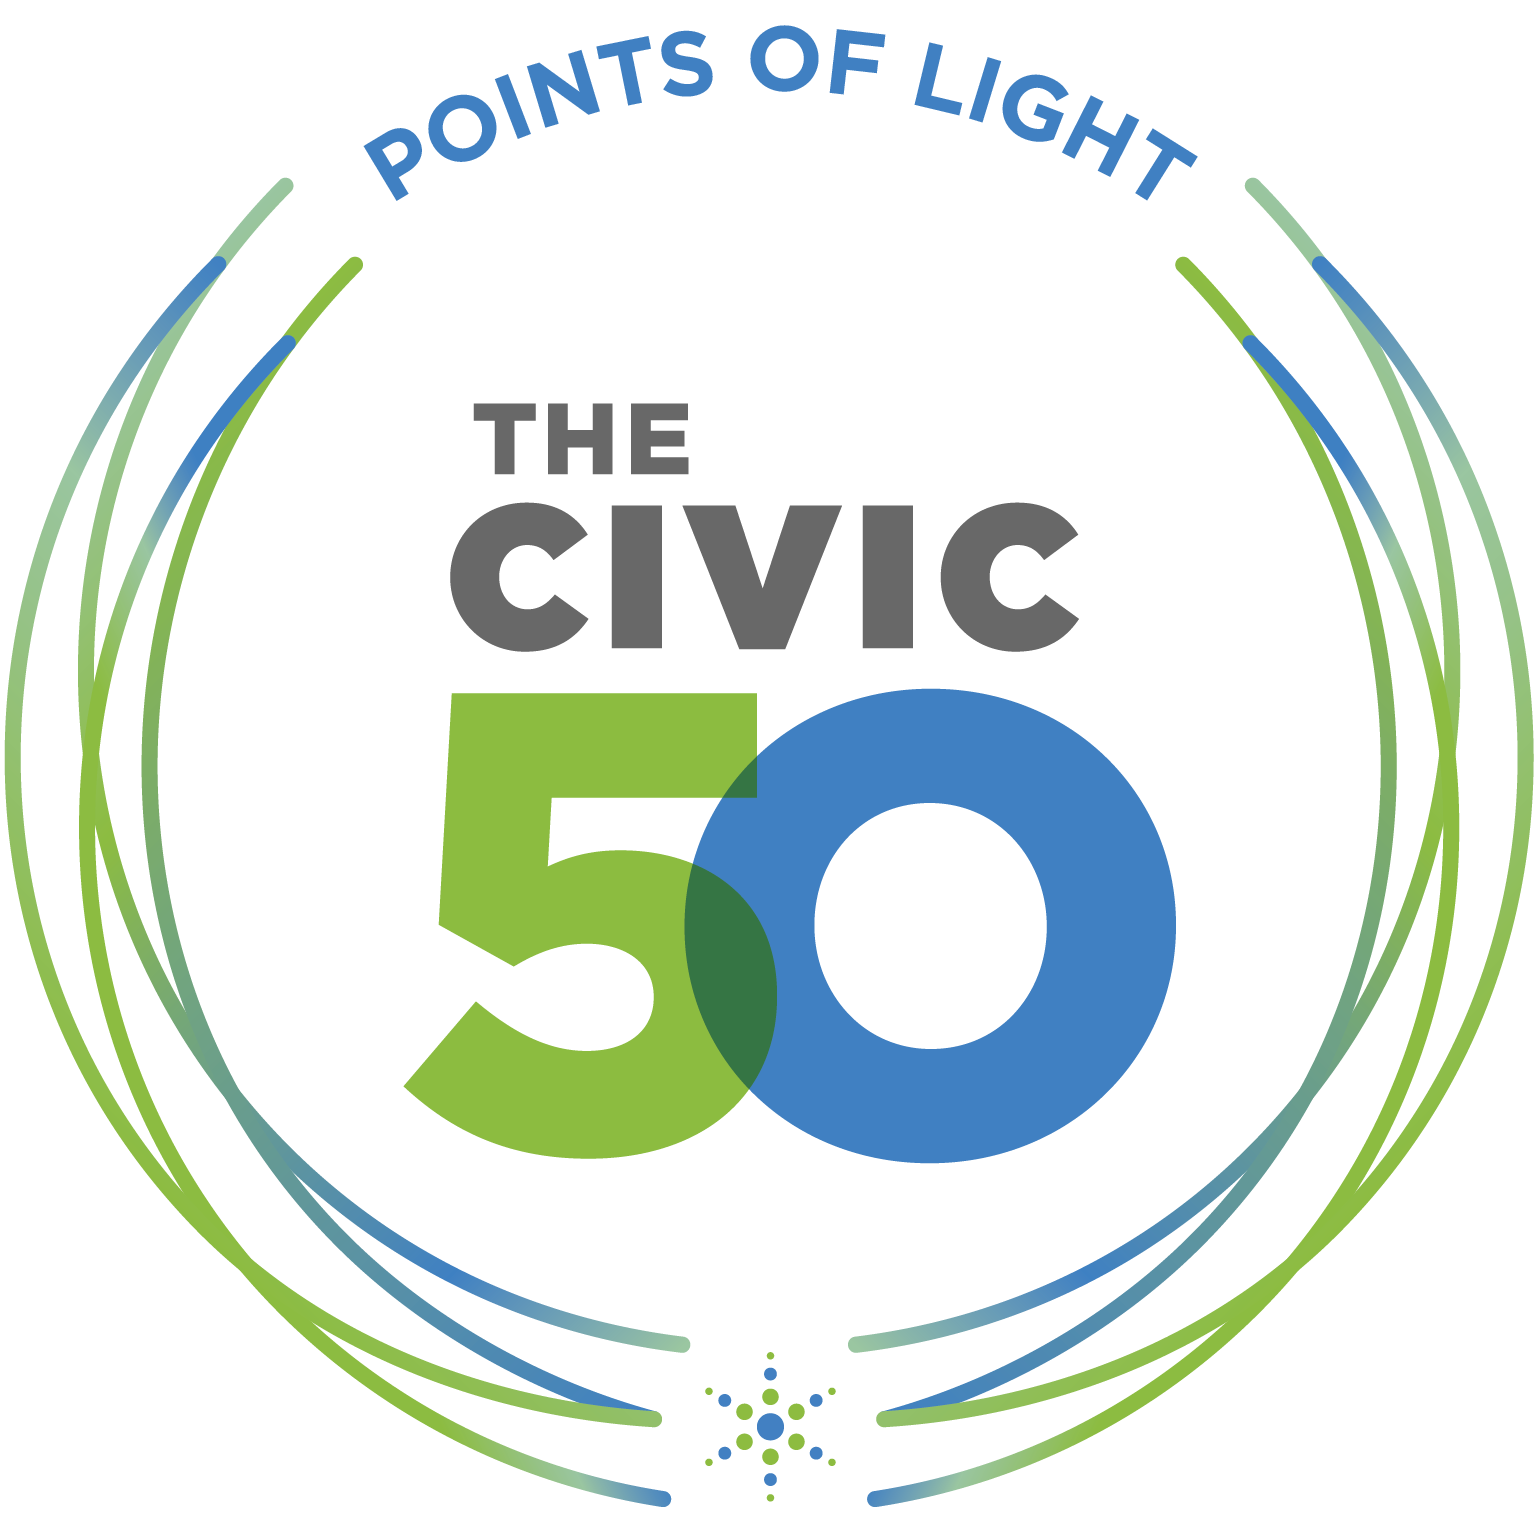 The Civic 50 Award